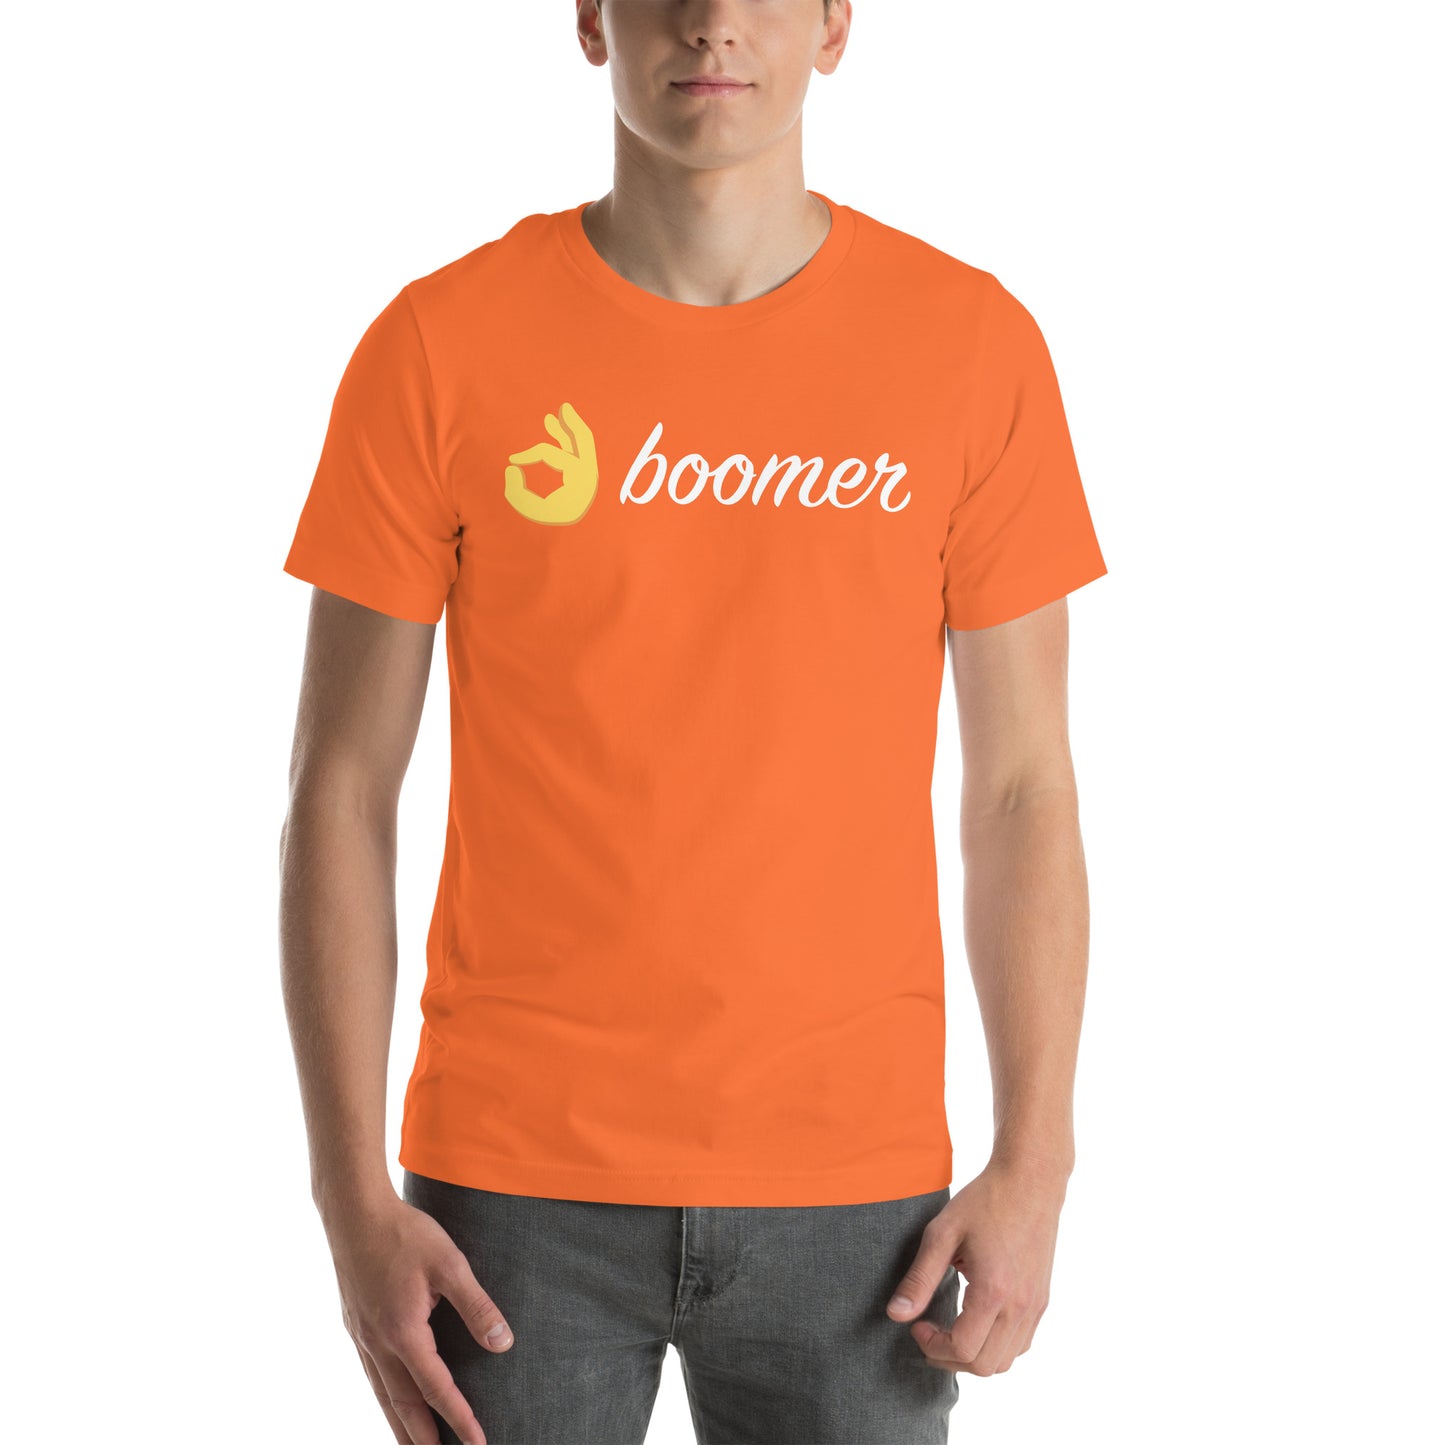 Classic OK Boomer light t-shirt